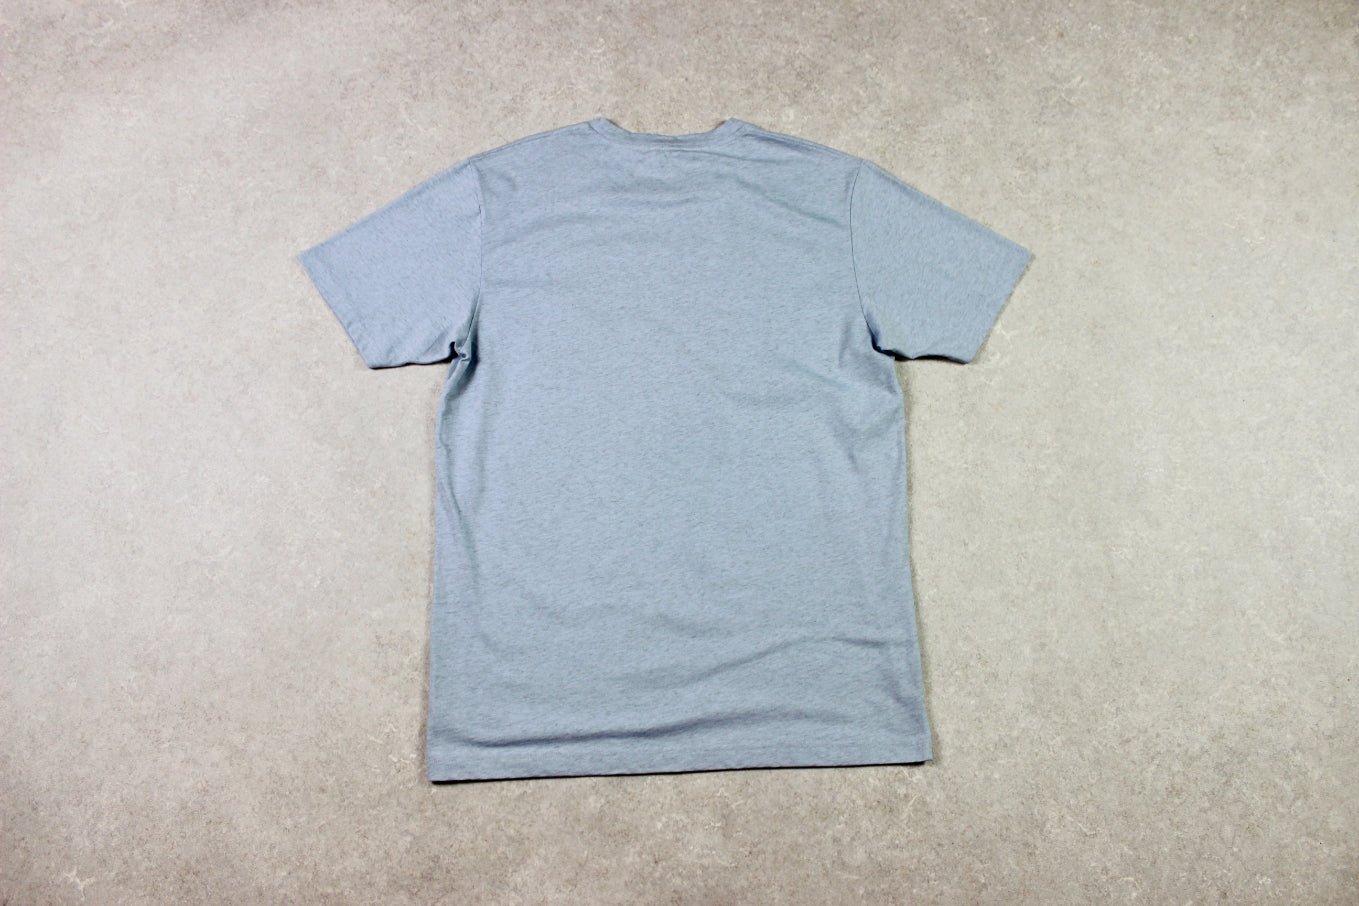 Sunspel - T Shirt - Blue - Medium - Brand New